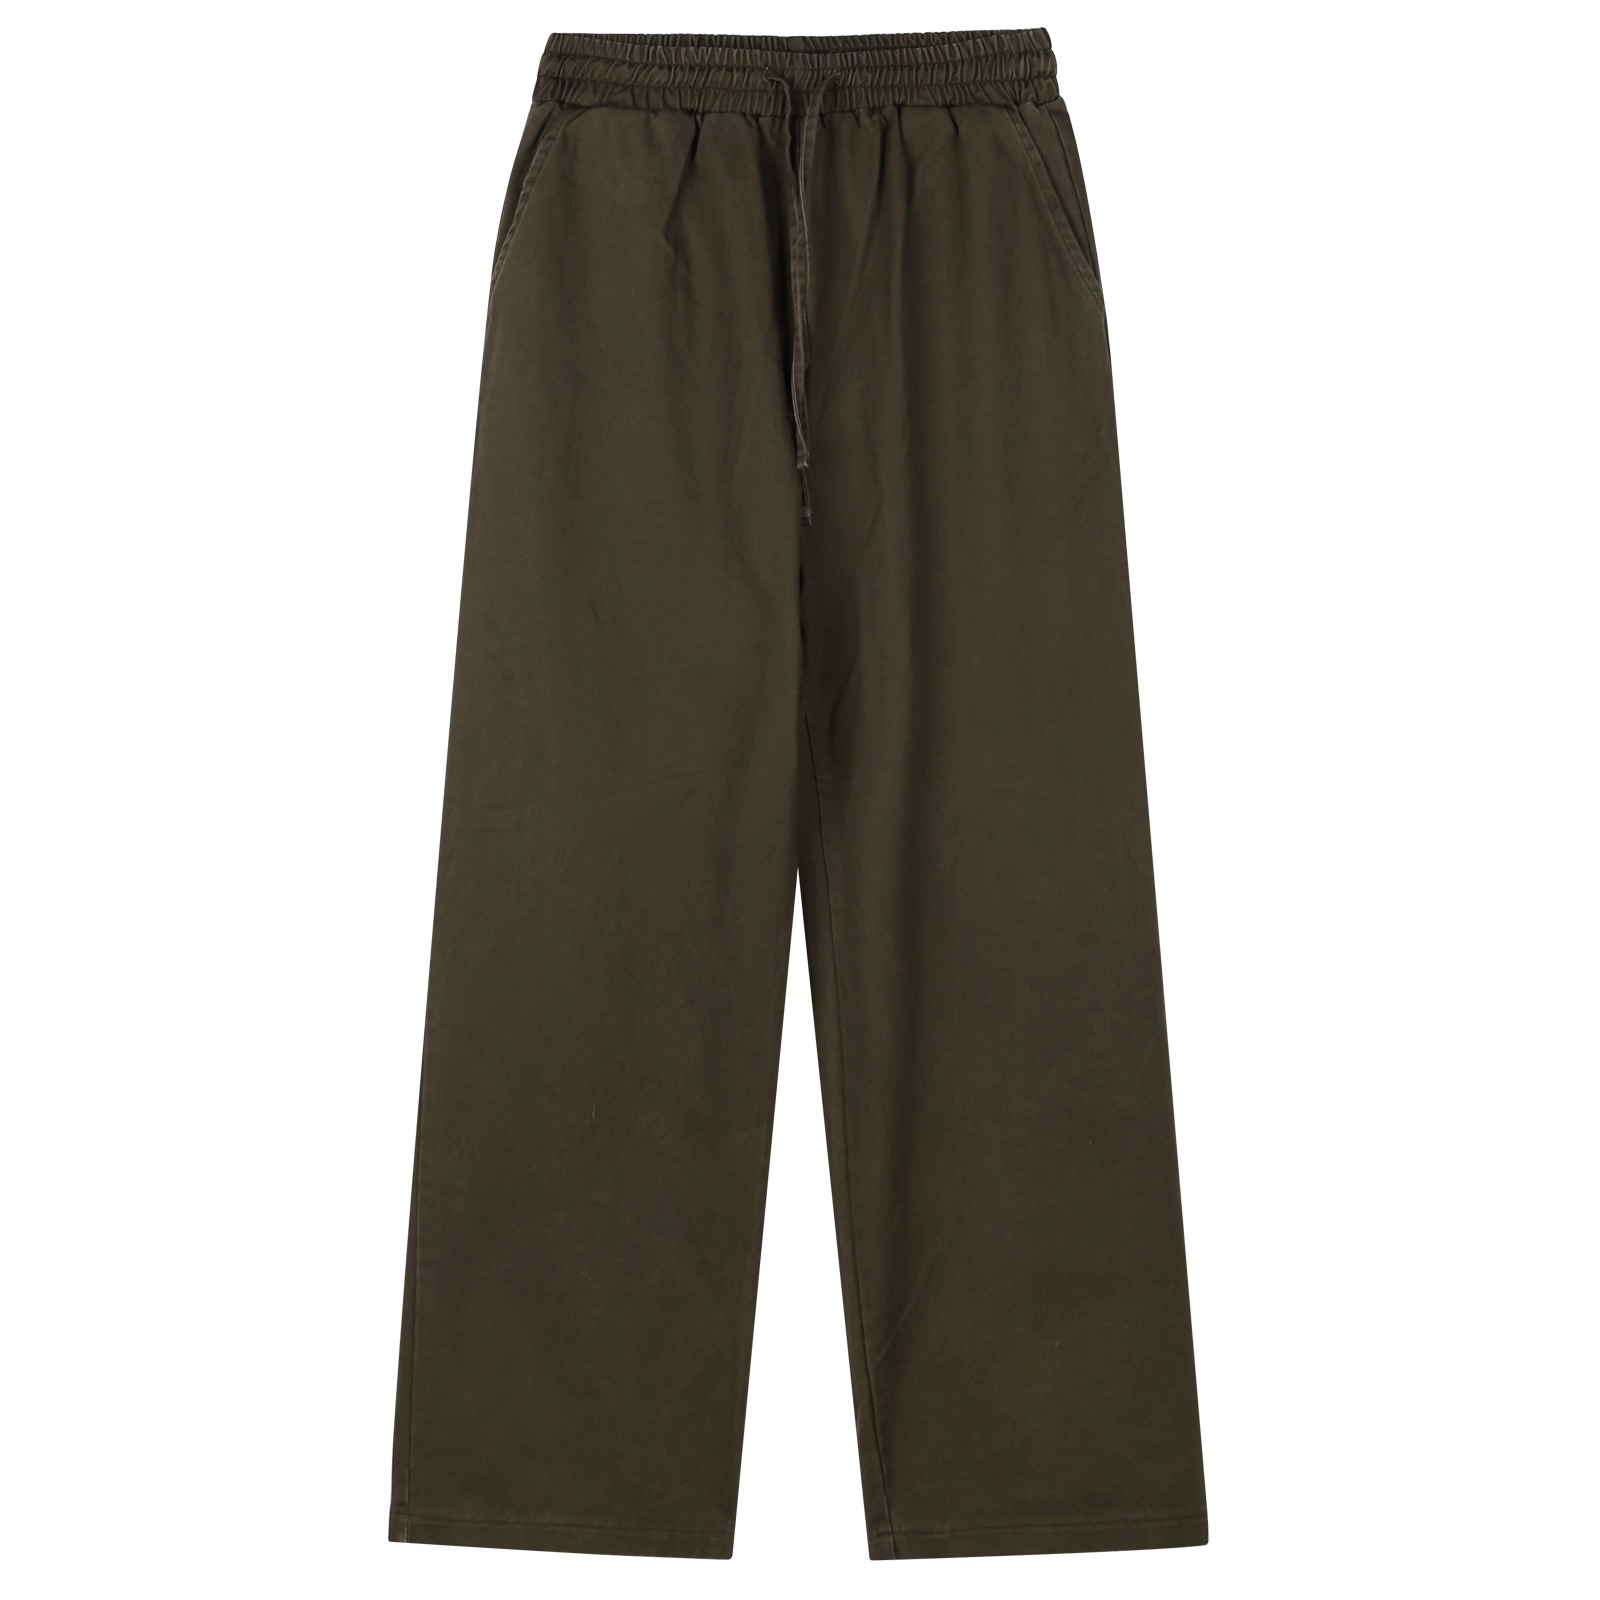 V149 wide cotton banding pants (dark brown)